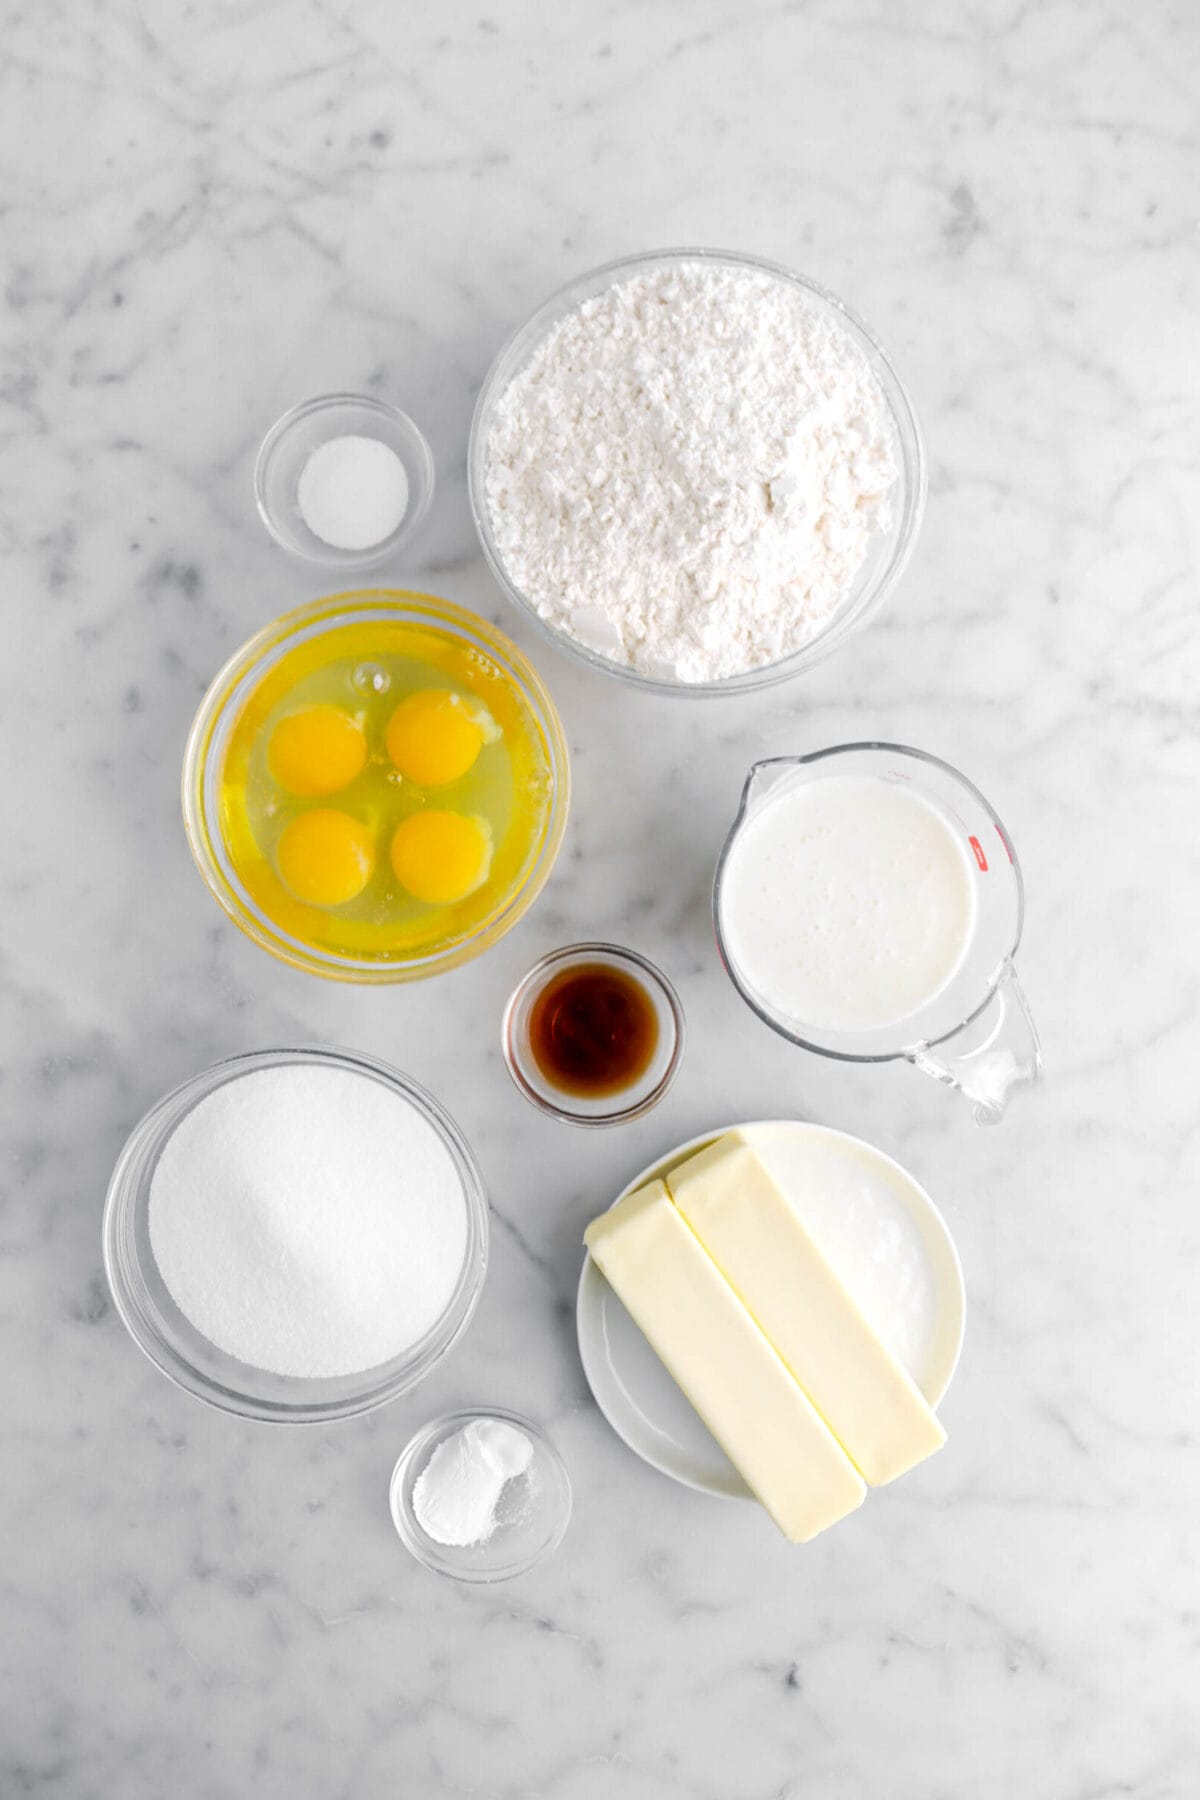 salt, flour, eggs, vanilla, milk, sugar, butter, and baking powder on marble surface.